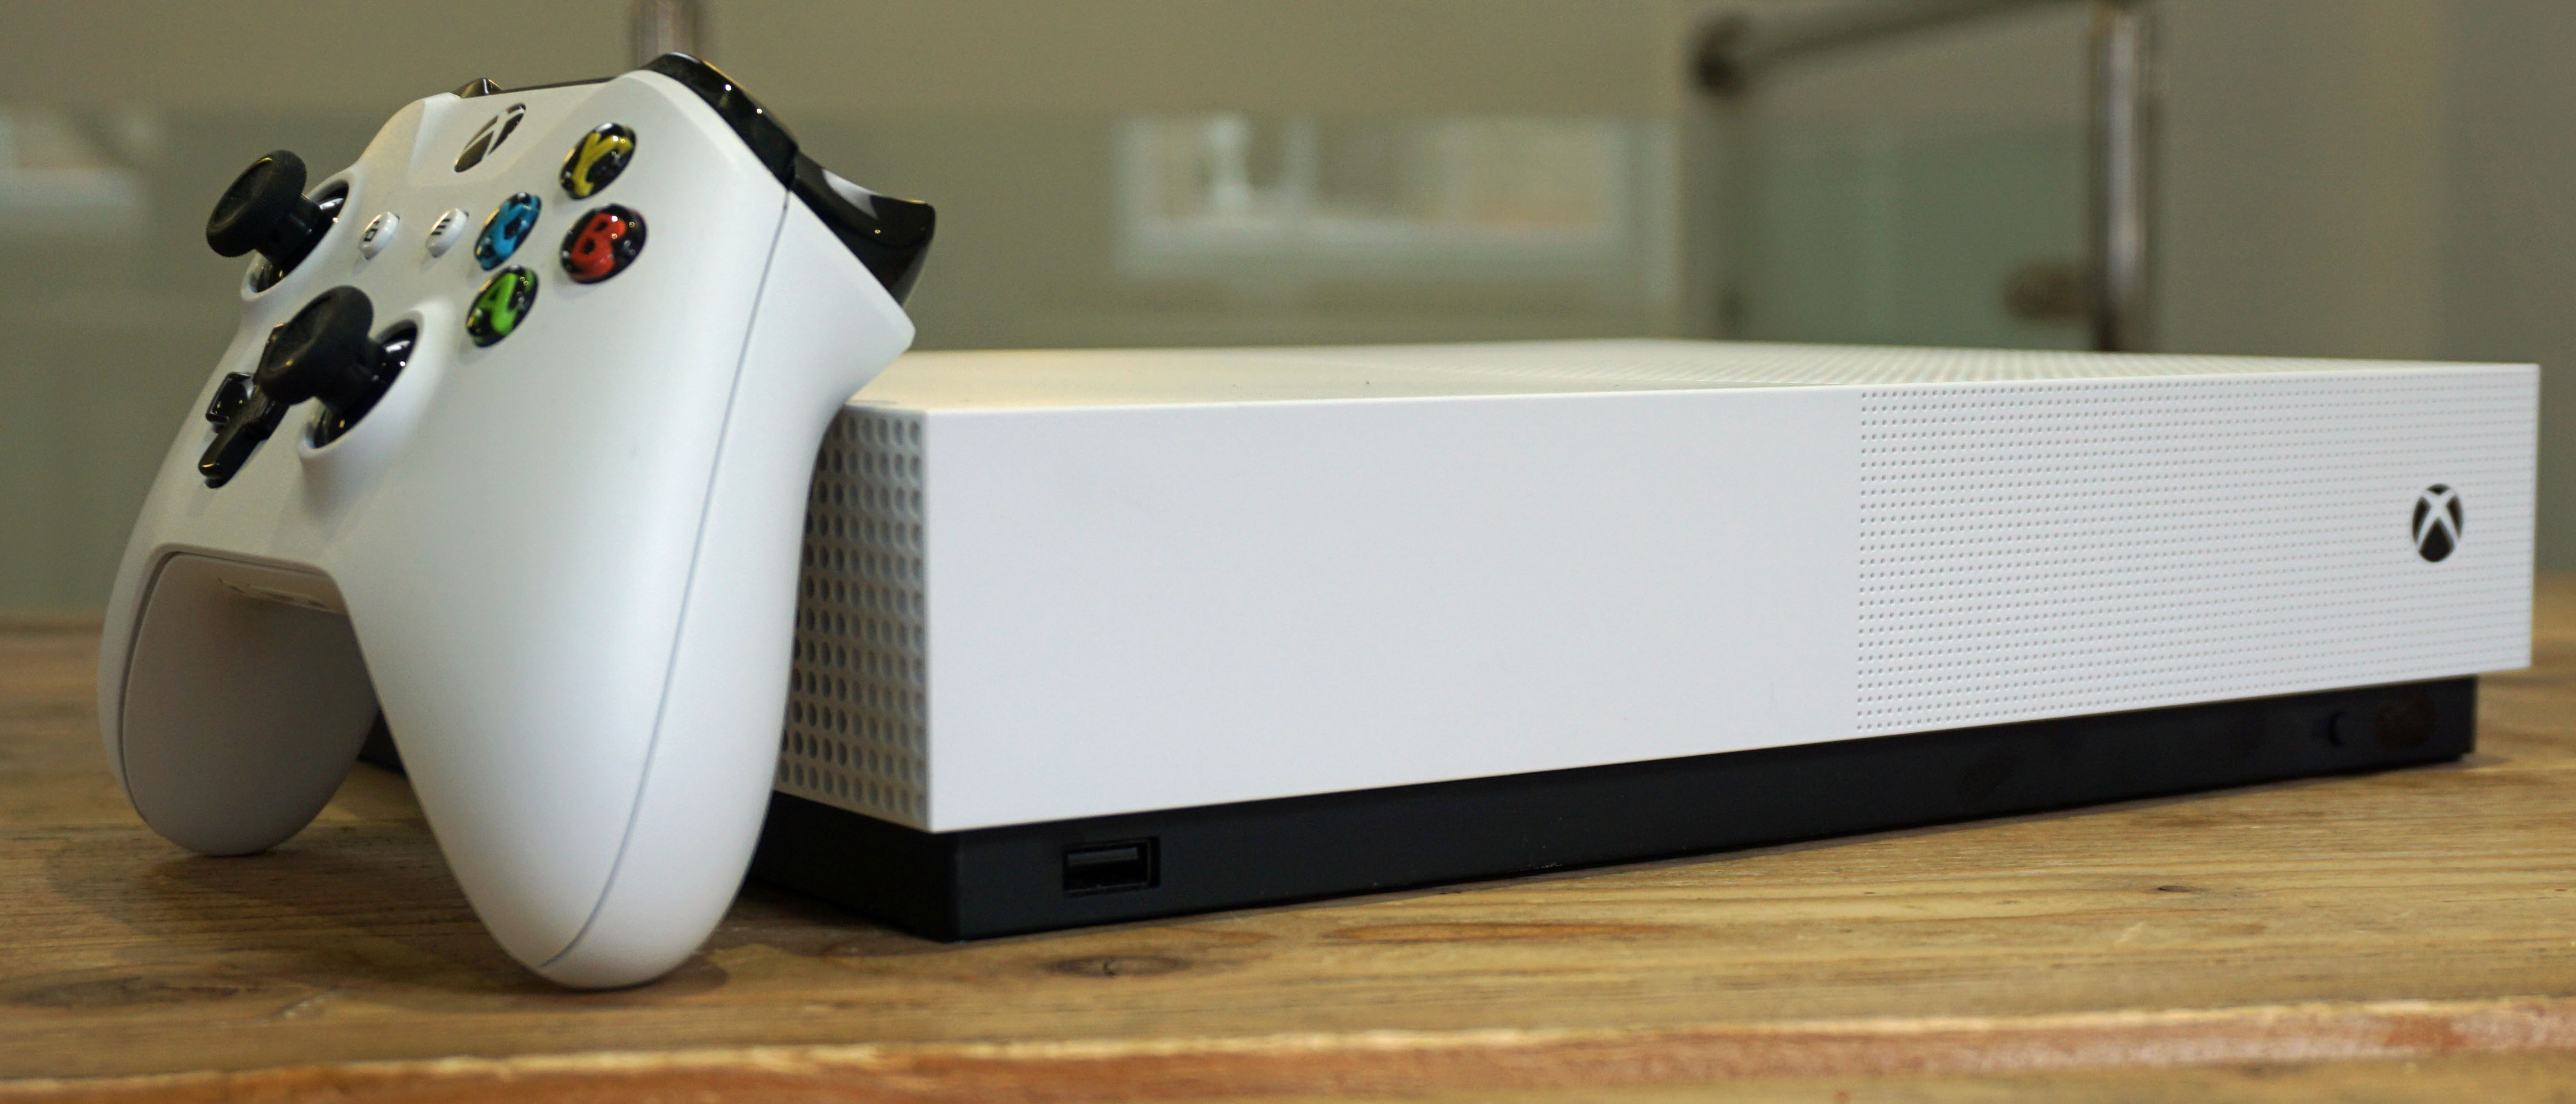 Indica Exclusivo Bosque Xbox One S All-Digital Edition: análisis | TechRadar